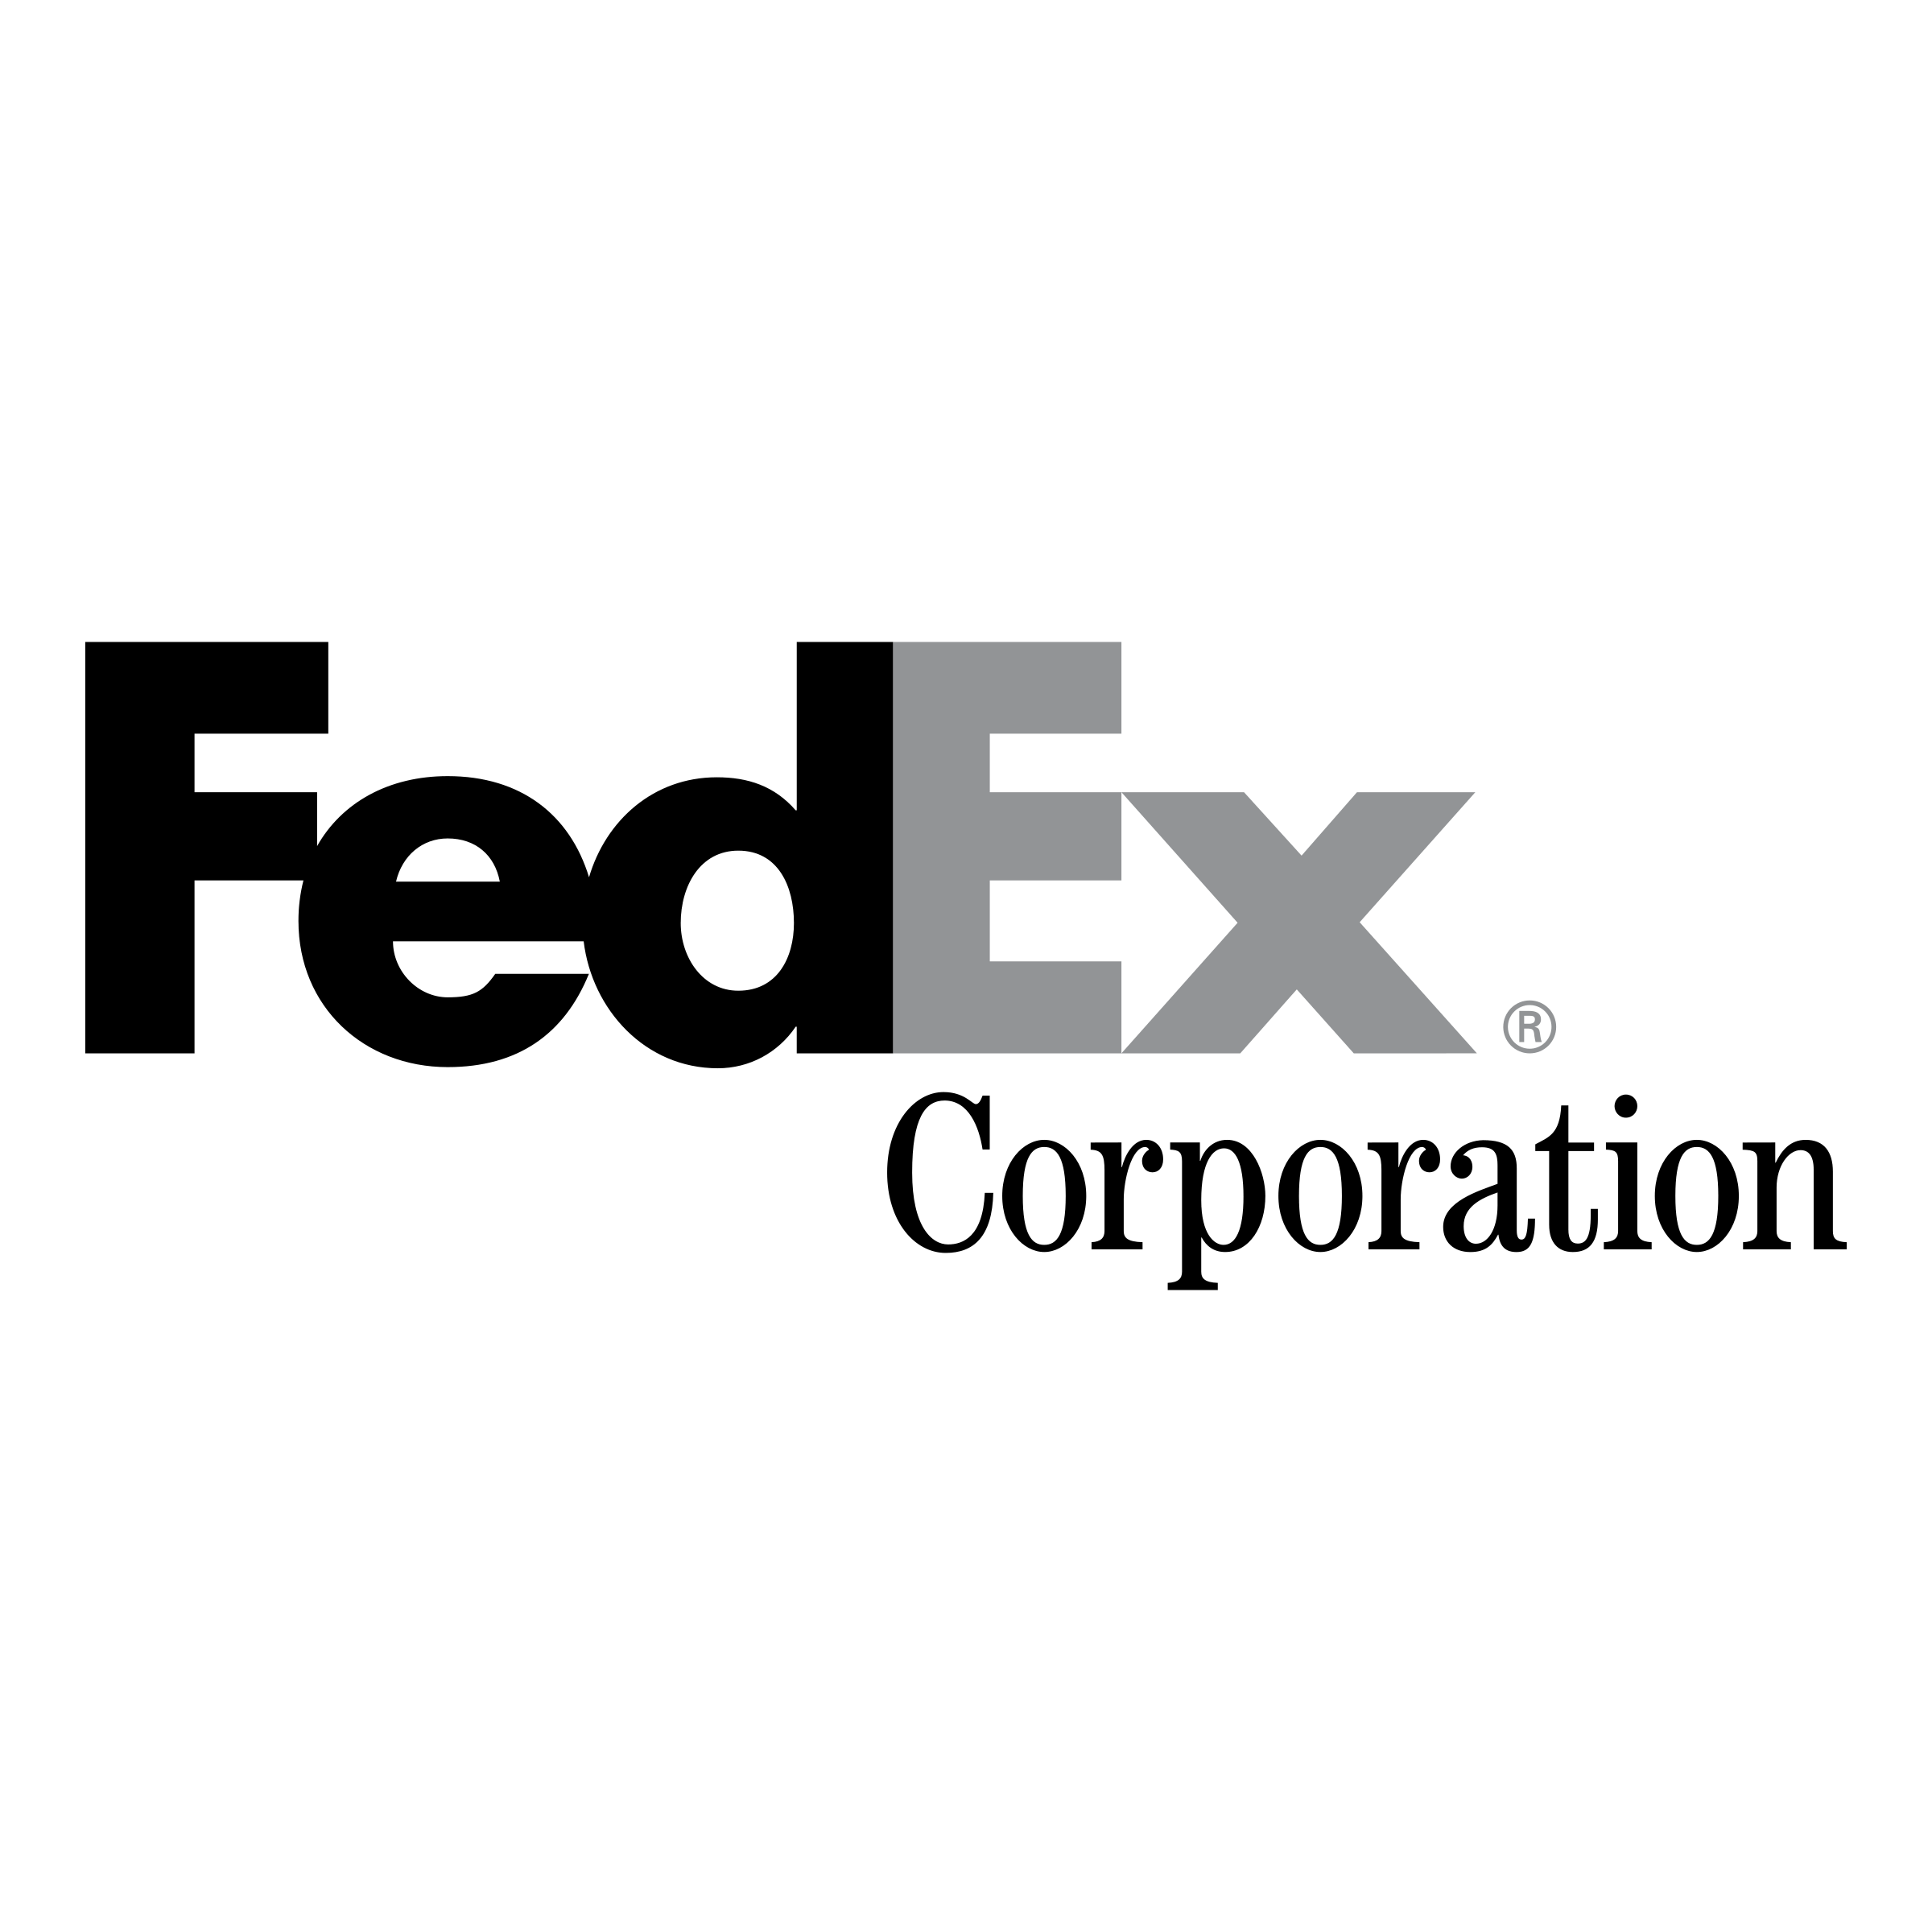 FedEx Loogo Logo - FedEx Corporation Logo PNG Transparent & SVG Vector - Freebie Supply